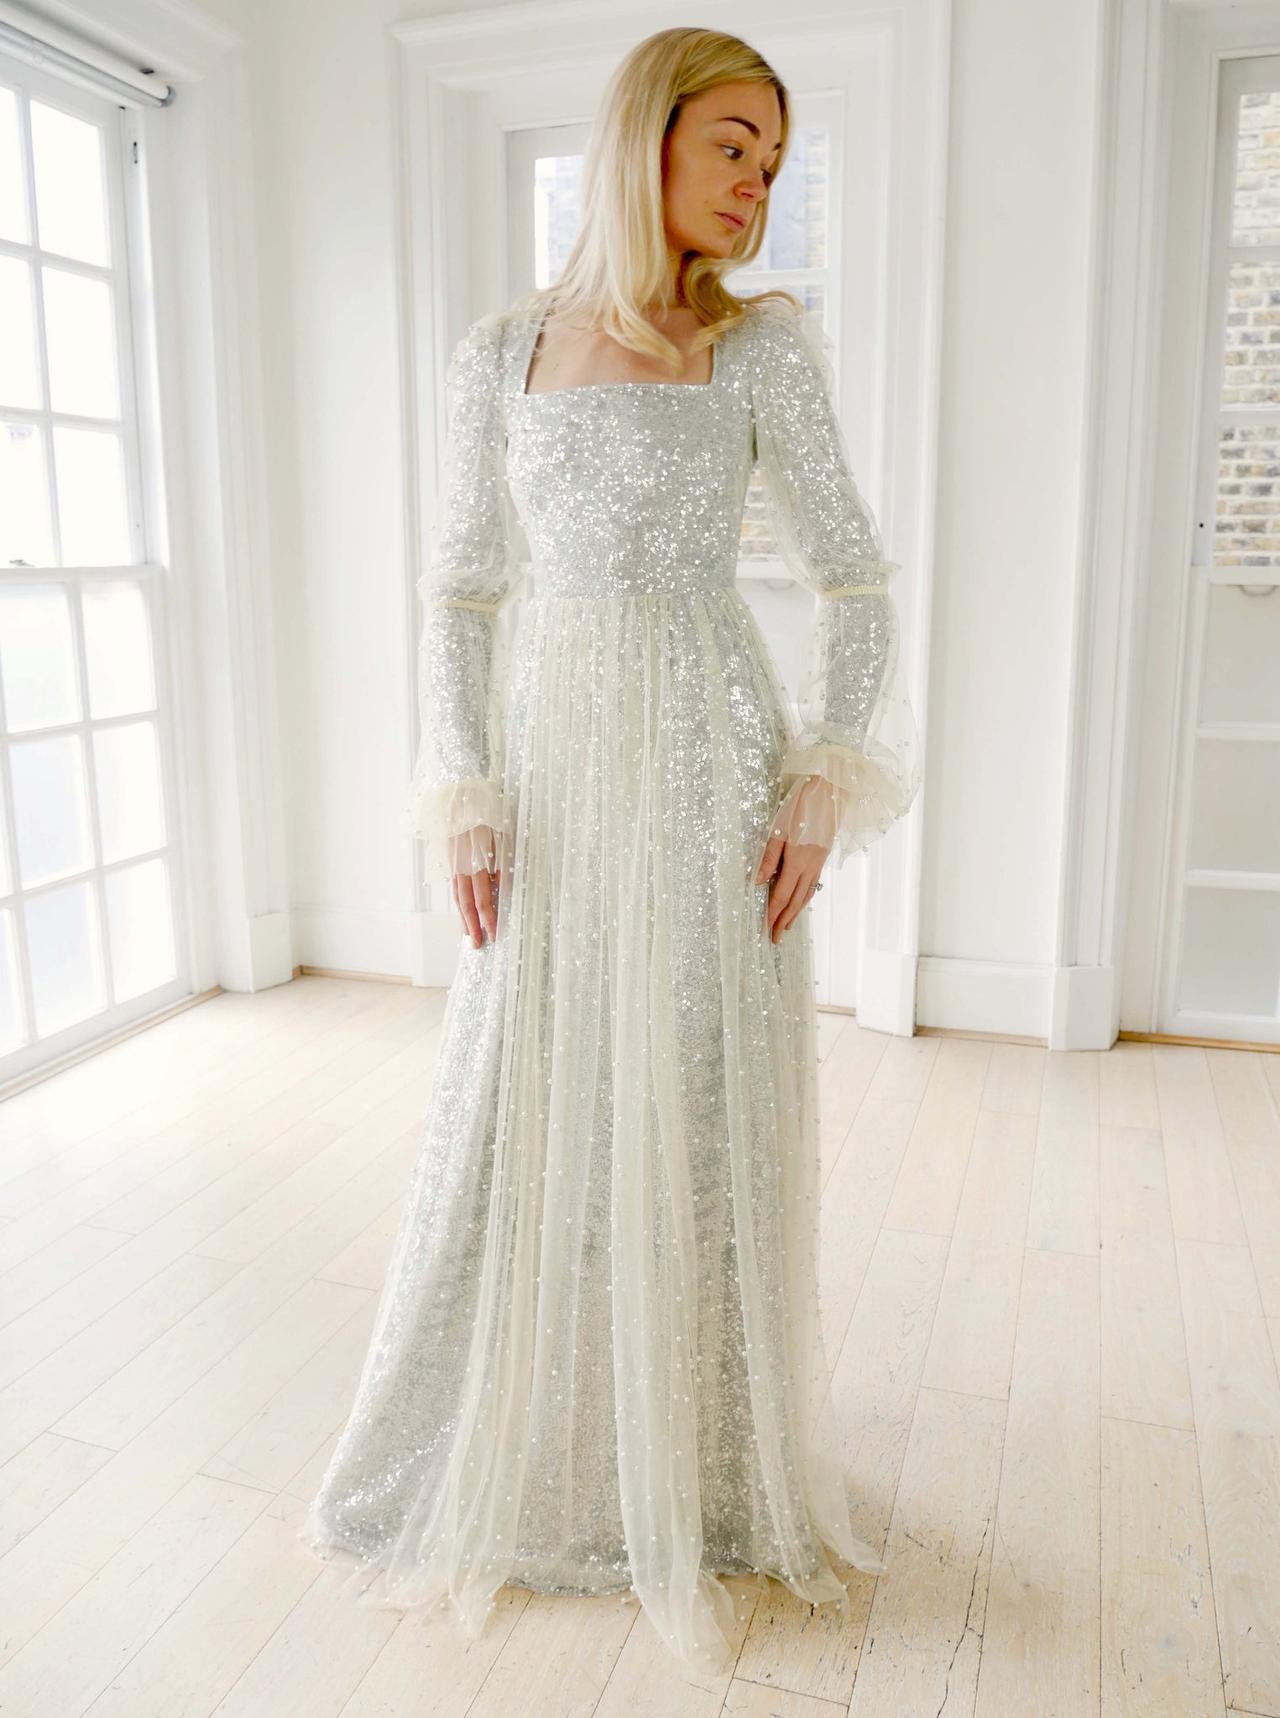 https://cdn0.hitched.co.uk/article/3296/original/1280/jpeg/86923-the-loop-wedding-dress.jpeg